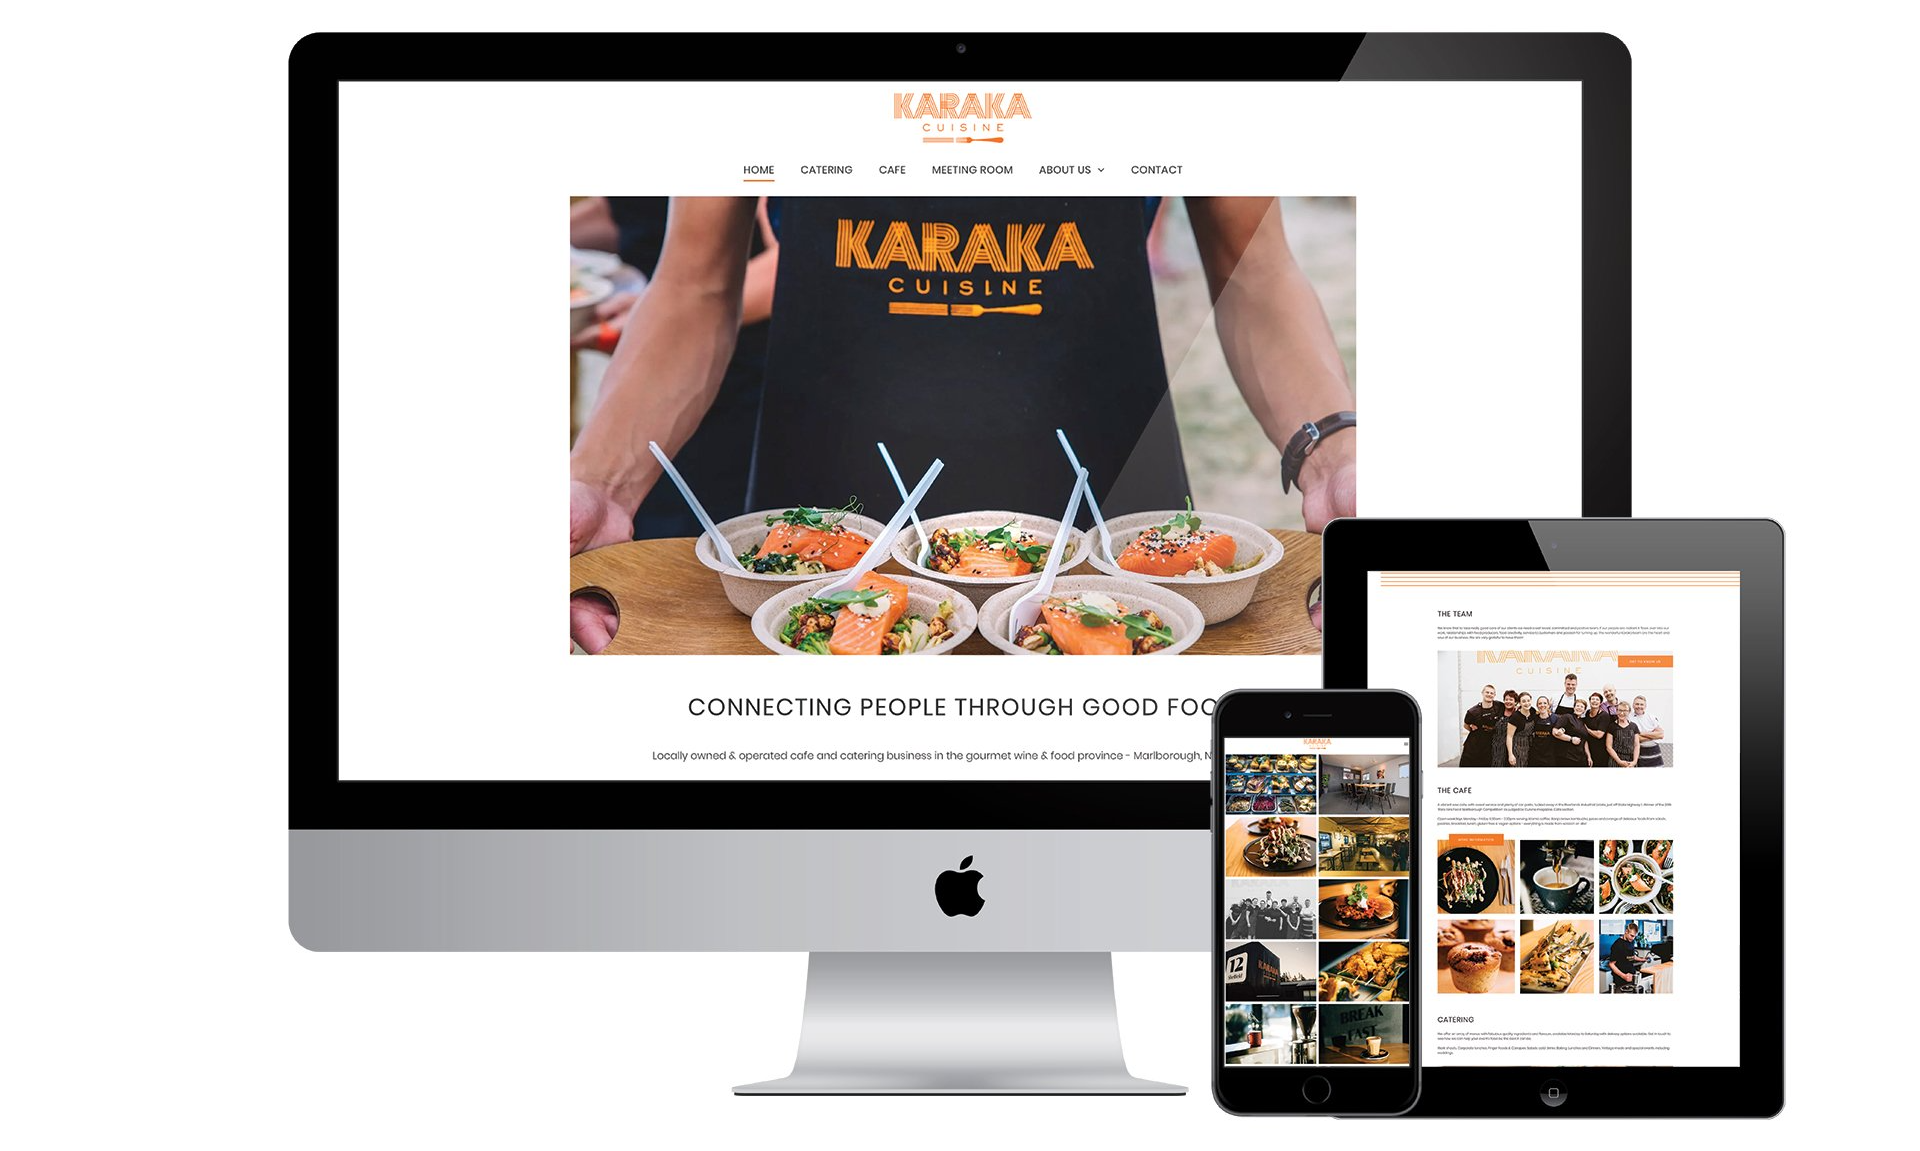 Karaka Cuisine website designed by Vanilla Hayes creative graphic design  studio in Blenheim, Marlborough, New Zealand